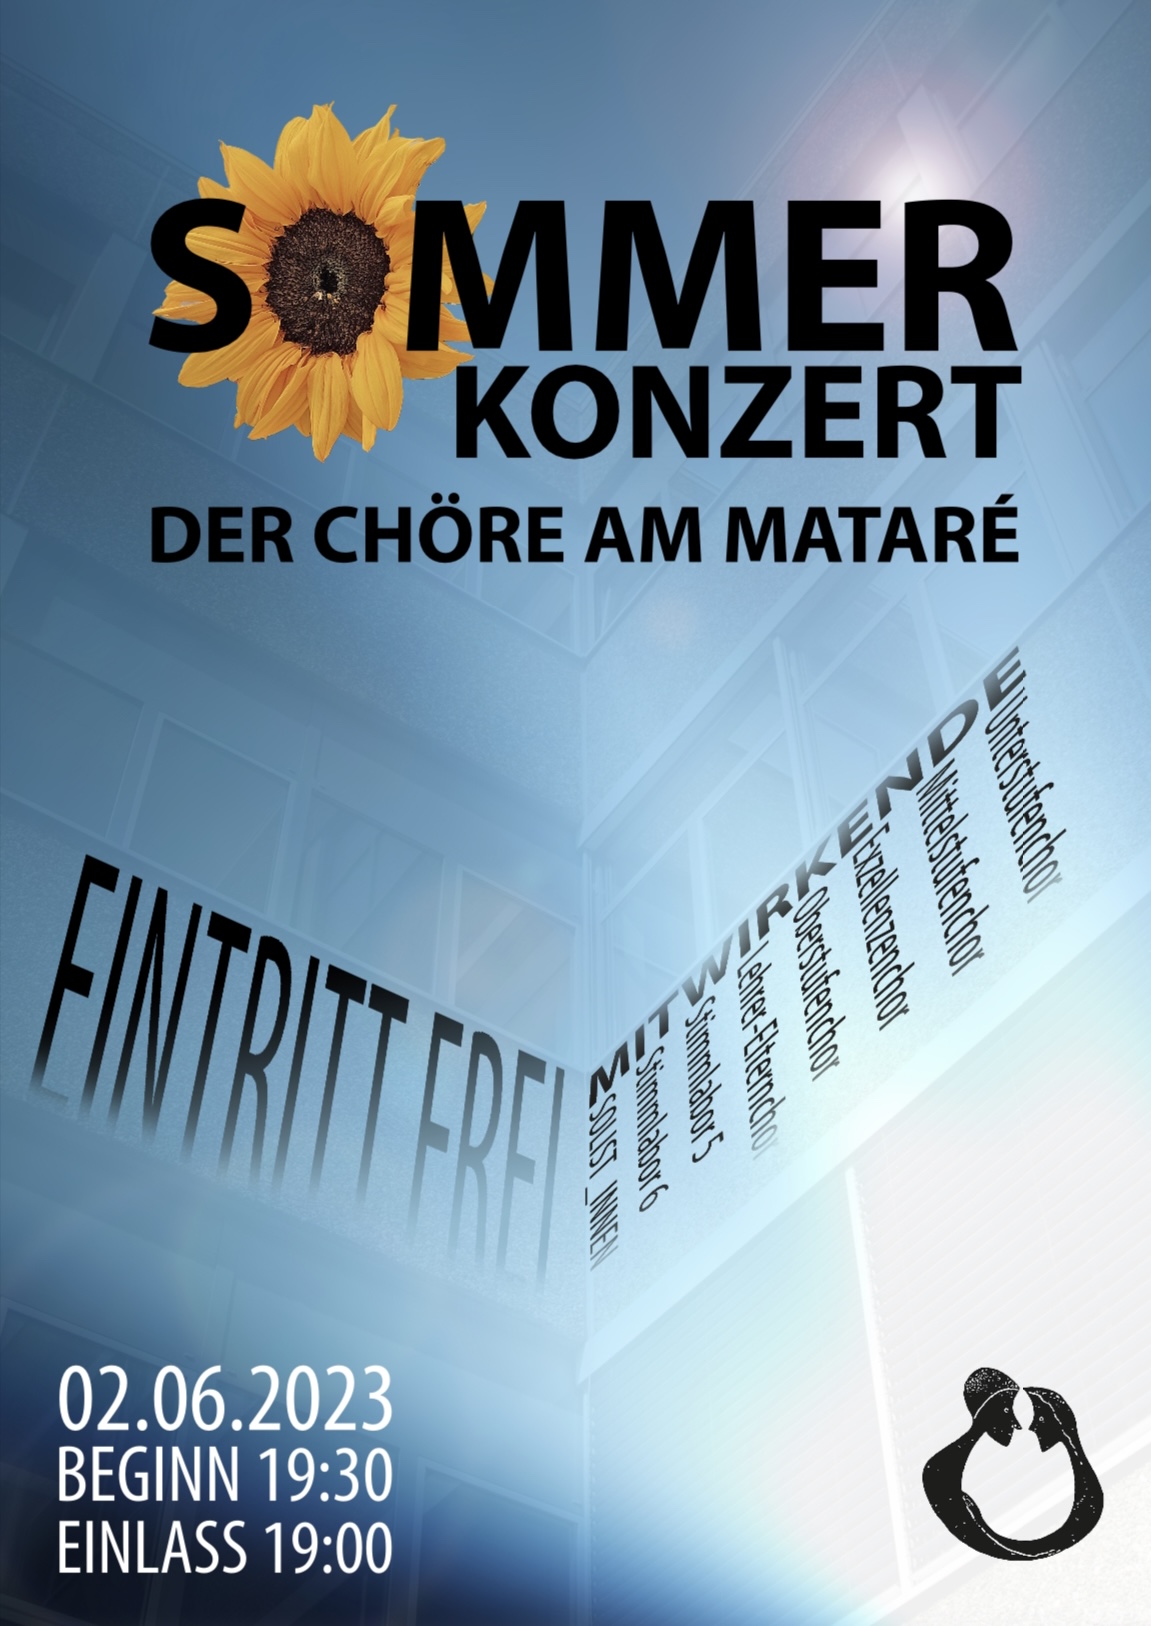 Plakat zum Sommerkonzert